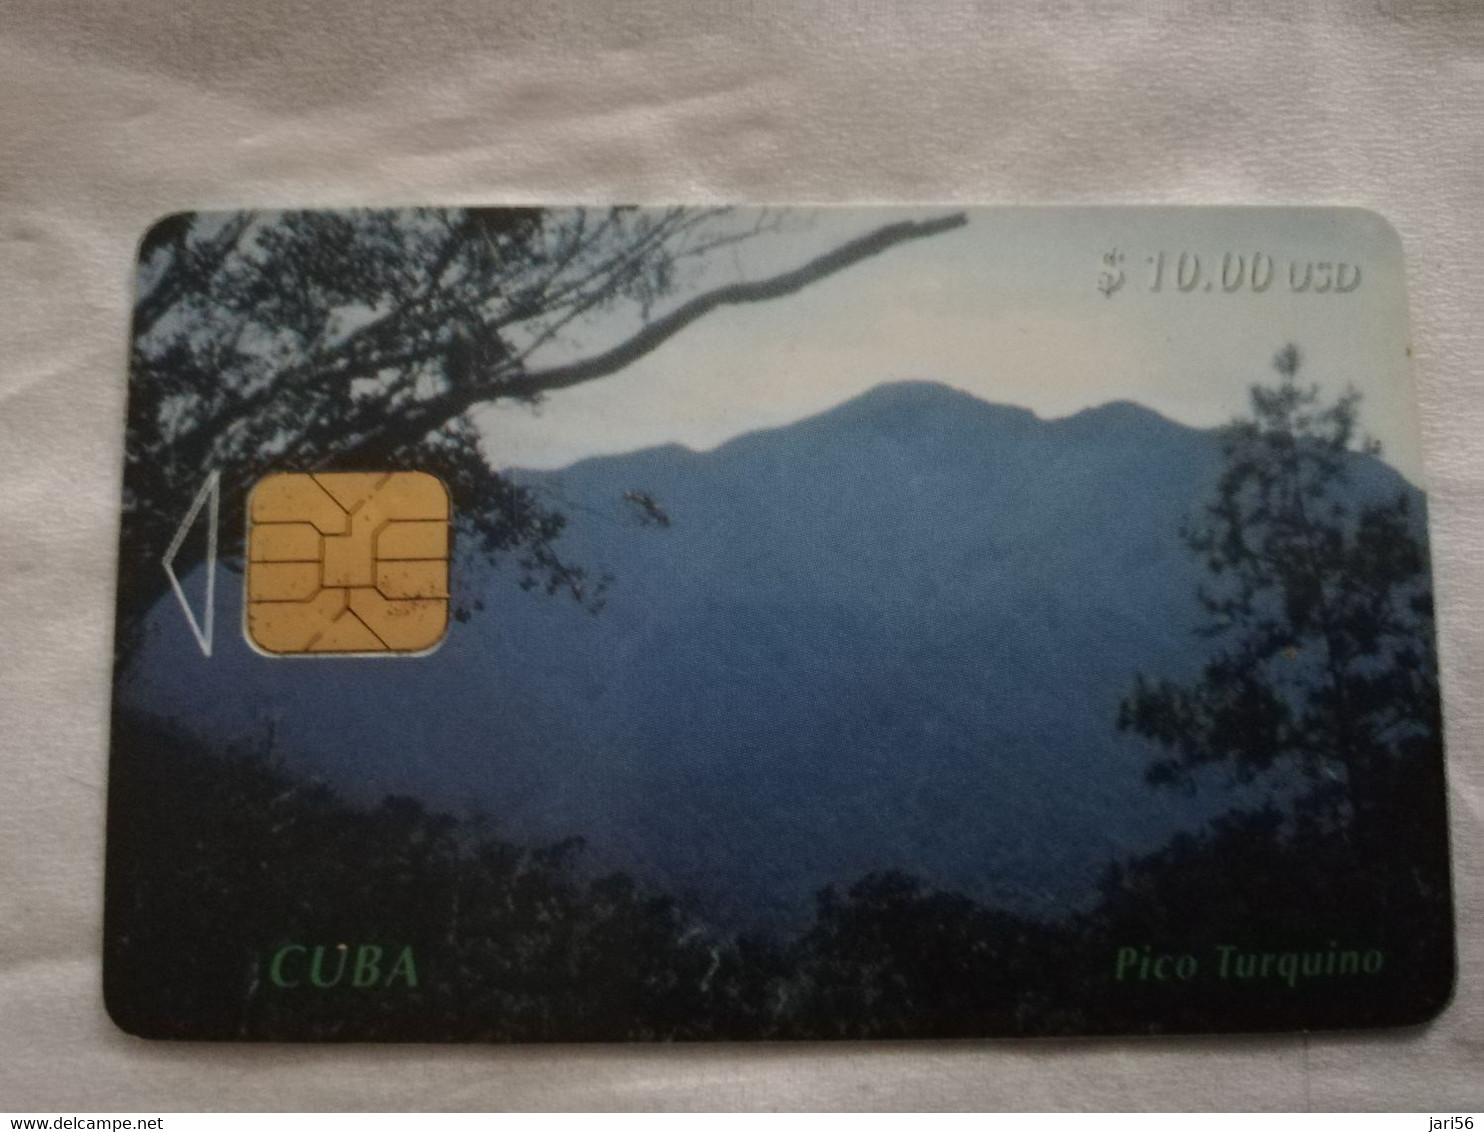 CUBA $10,00 CHIPCARD   PICO TURQUINO     Fine Used Card  ** 6800** - Cuba